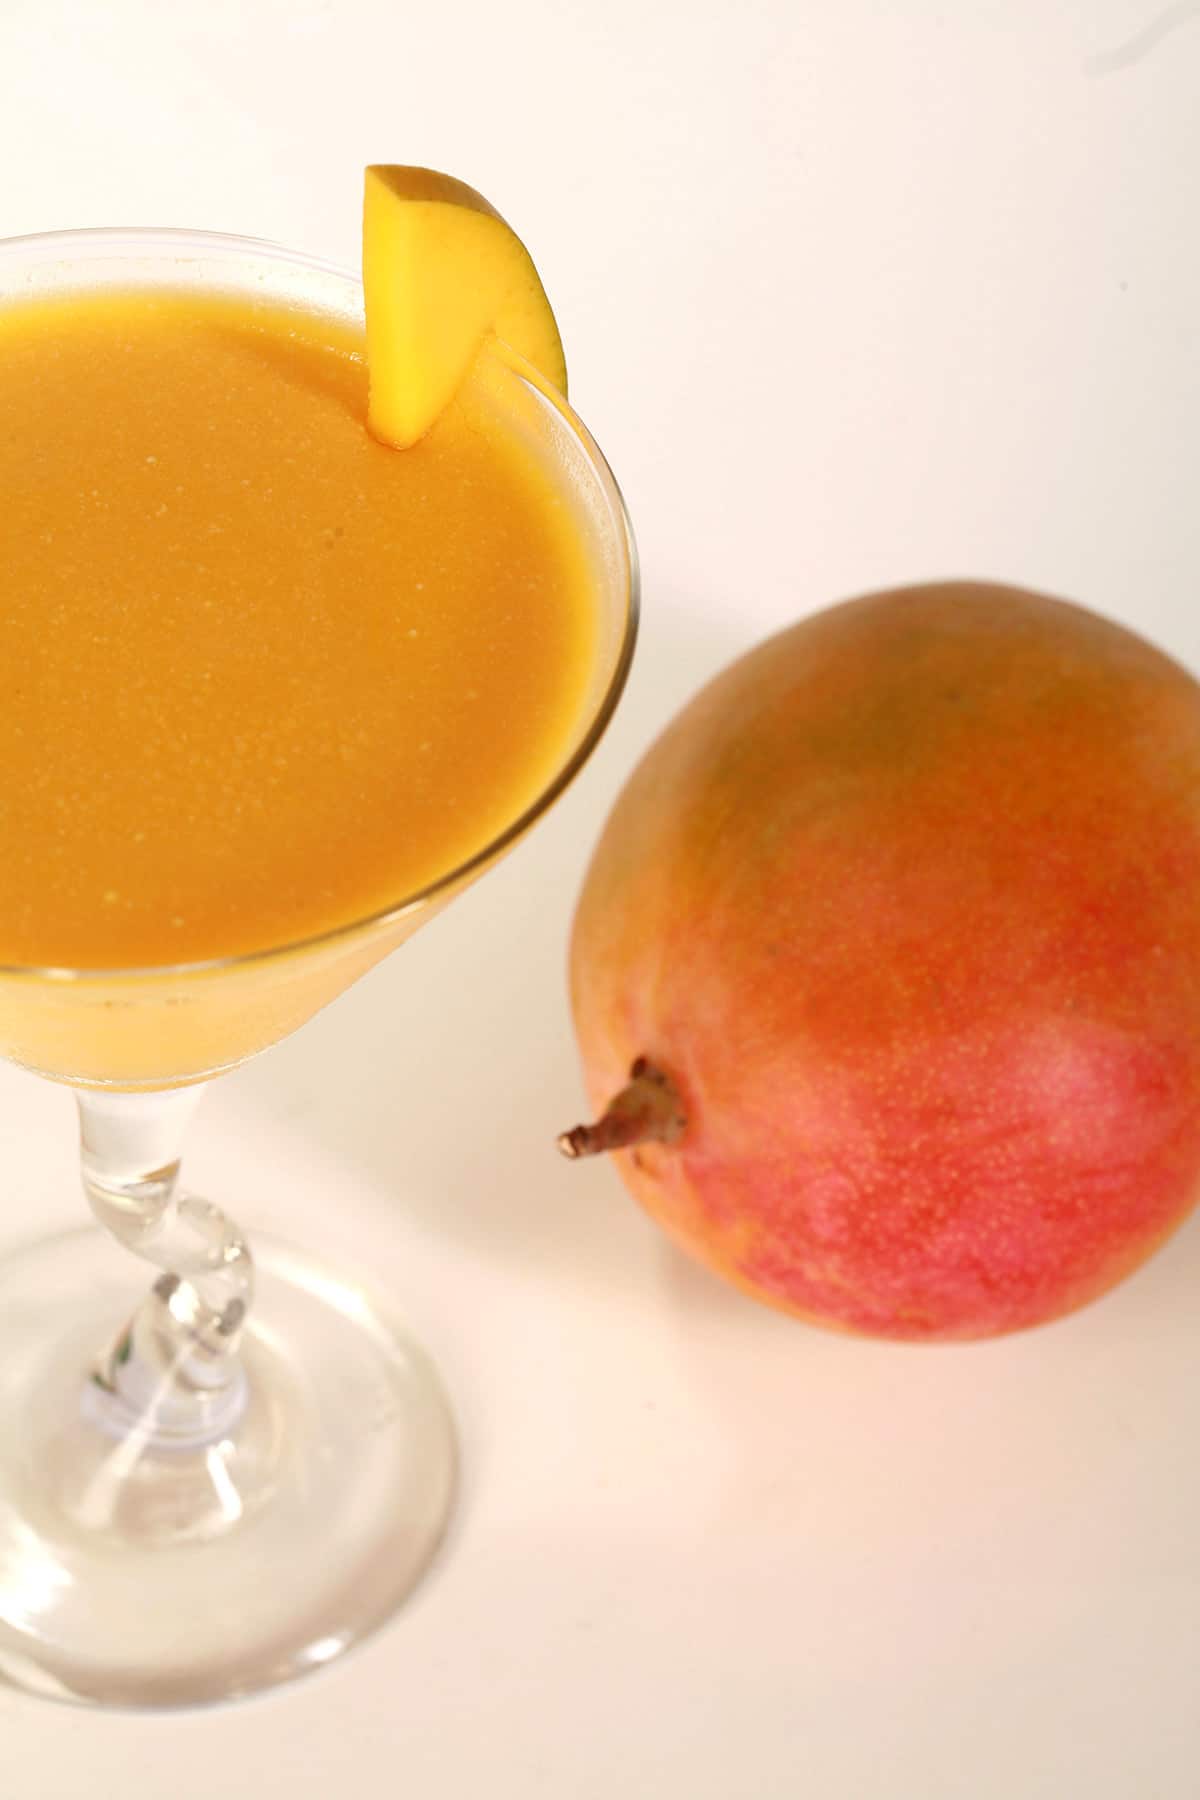 A martini glass of mango daiquiri panna cotta, with a whole mango next to it.